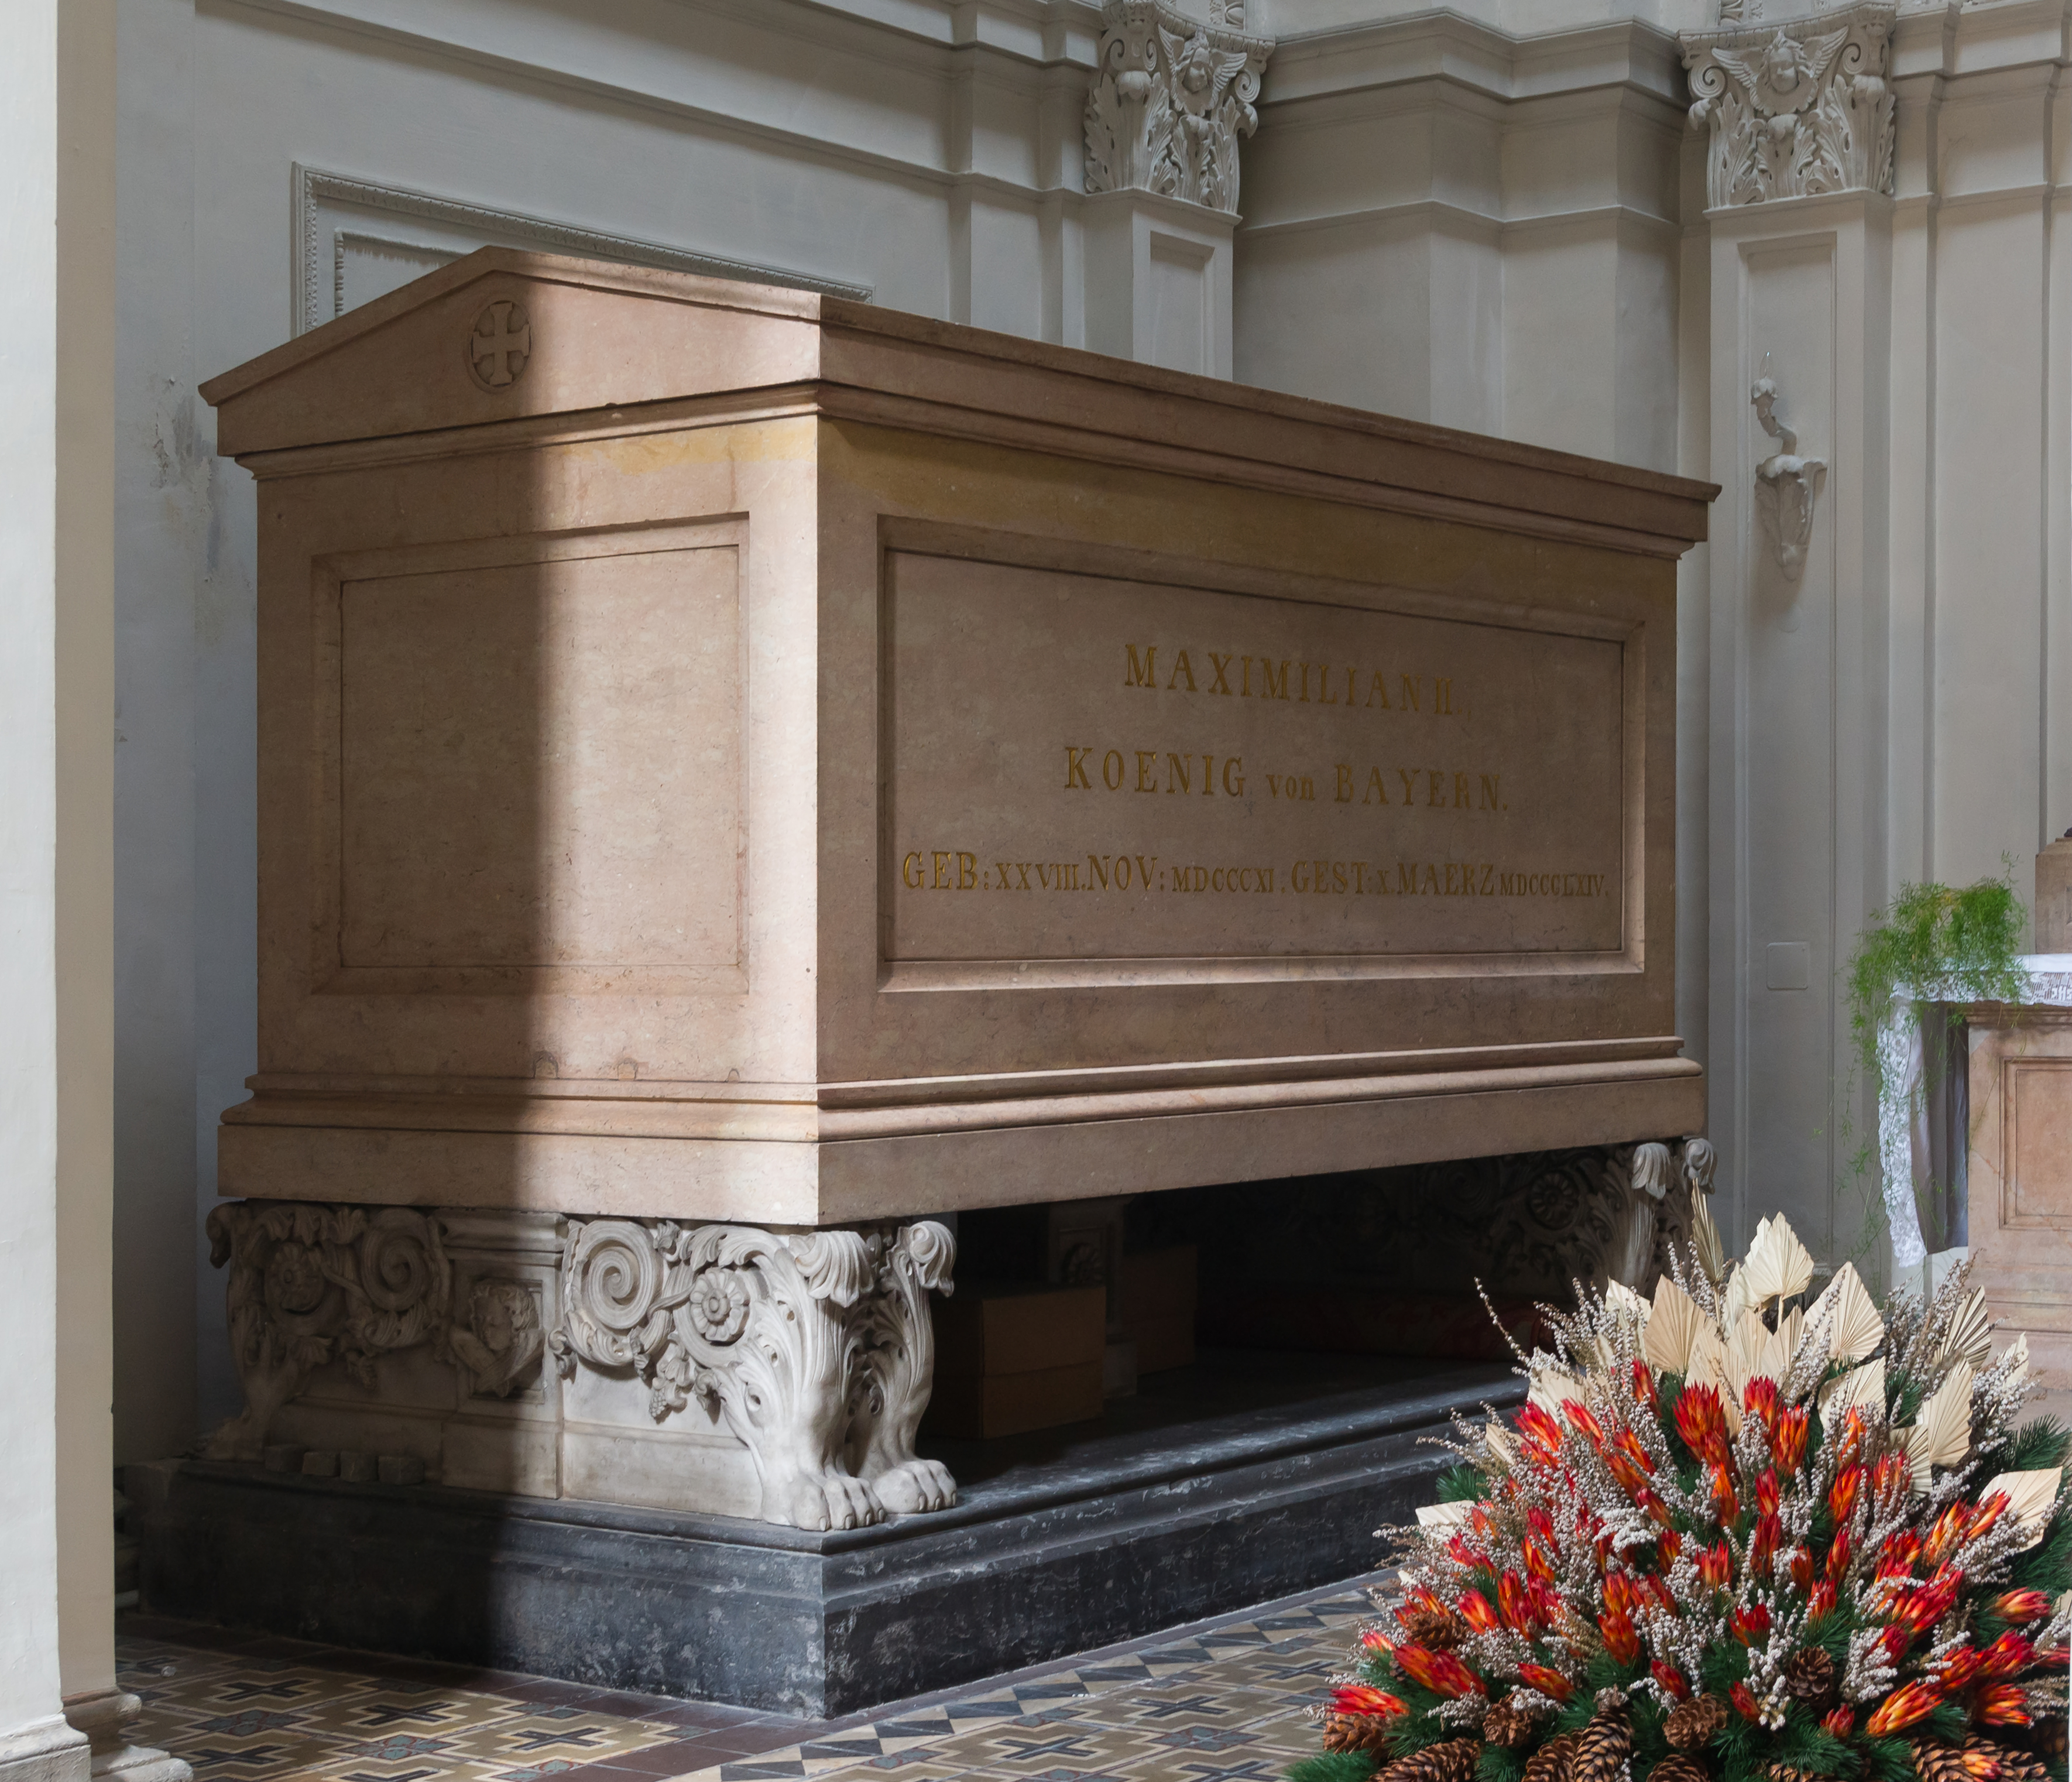 Tomb Maximilian II von Bayern inside Theatinerkirche Munich